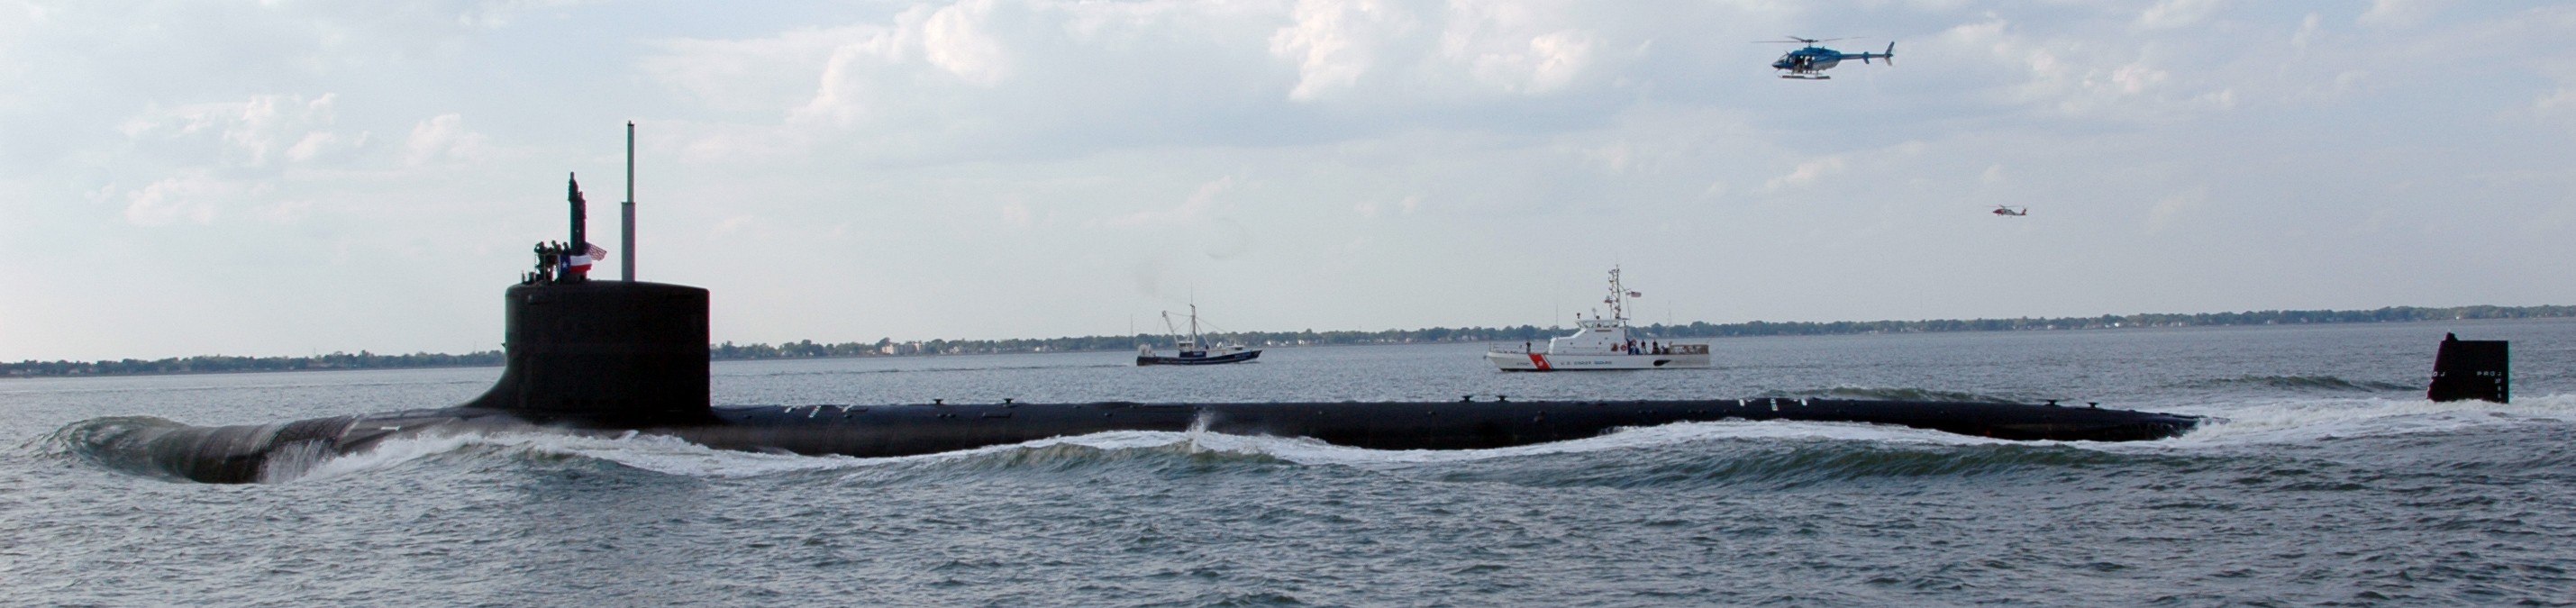 ssn-775 uss texas virginia class attack submarine navy 2006 48